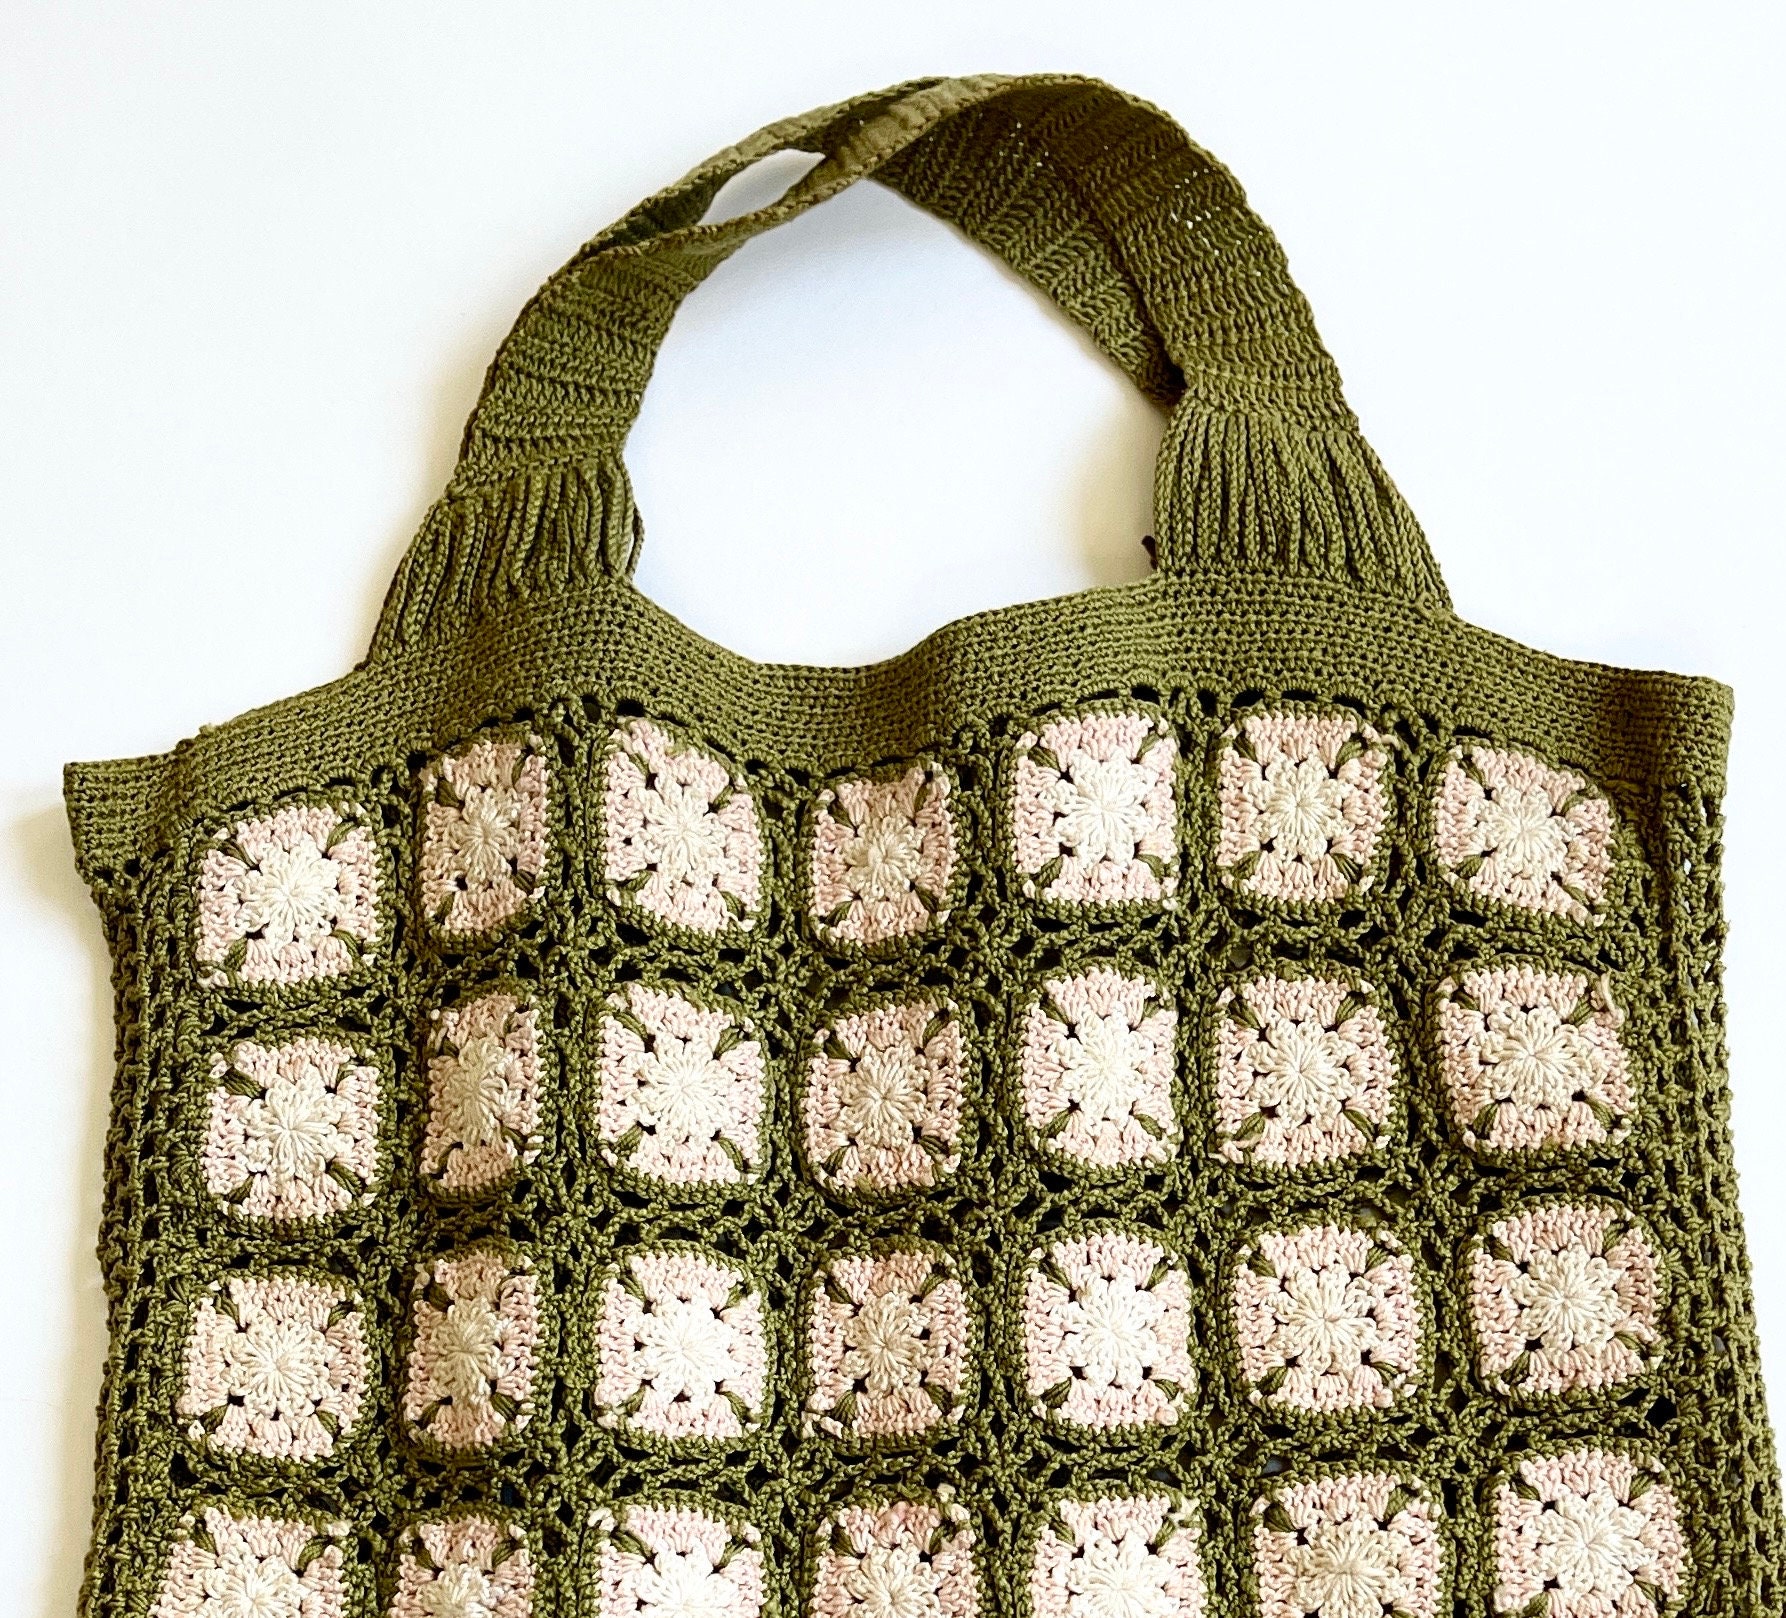 Navy is the World's Most Underrated Handbag Color - PurseBlog